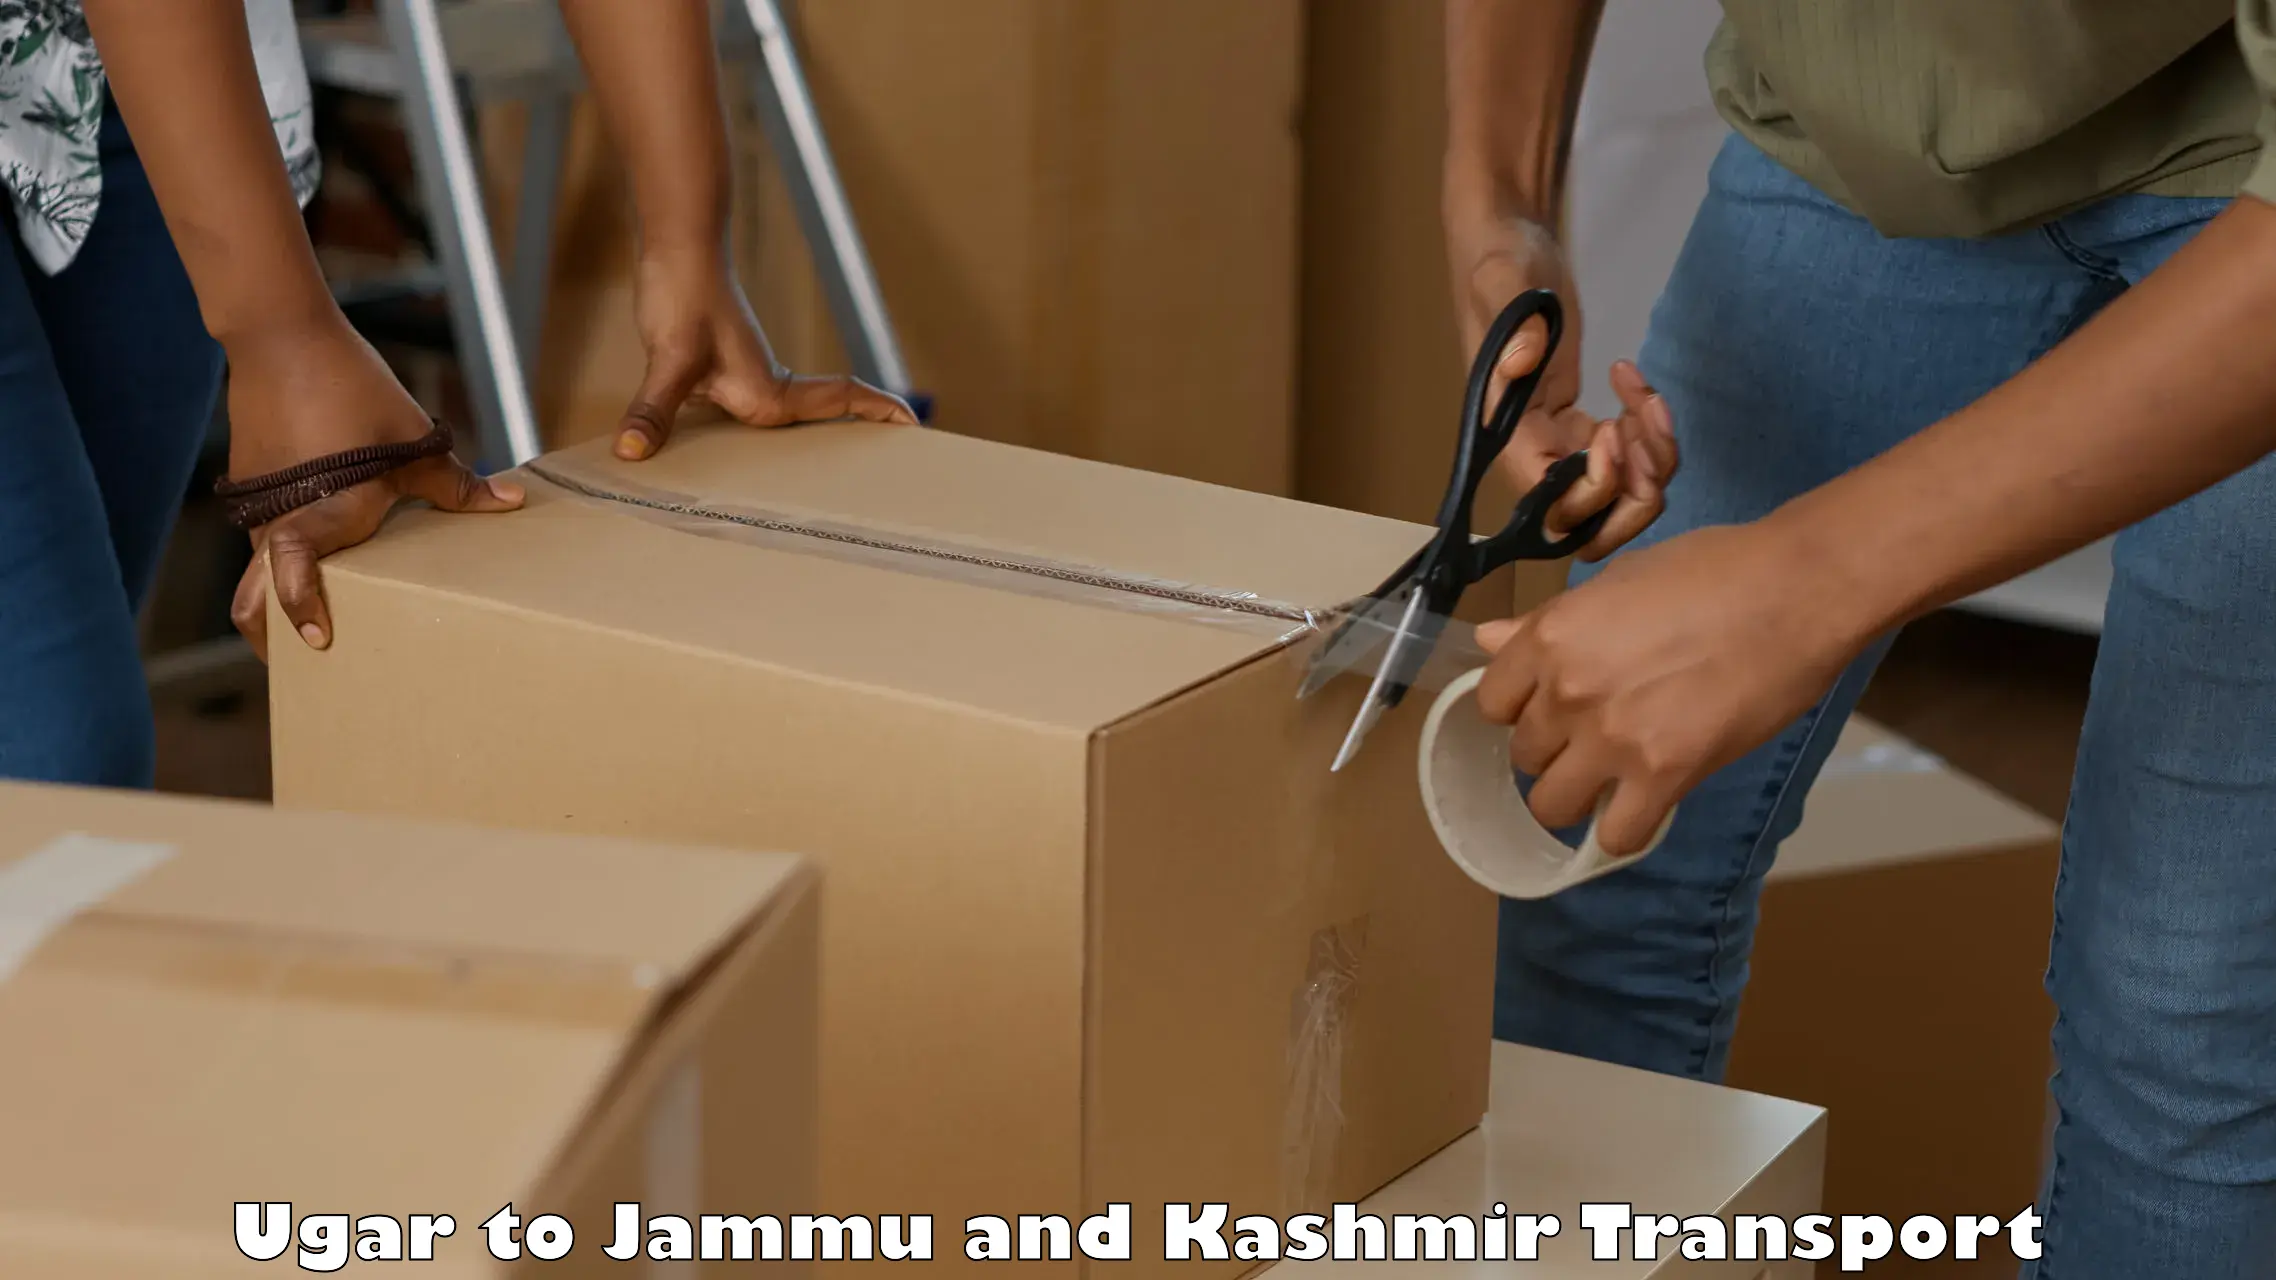 Container transport service Ugar to Jammu and Kashmir